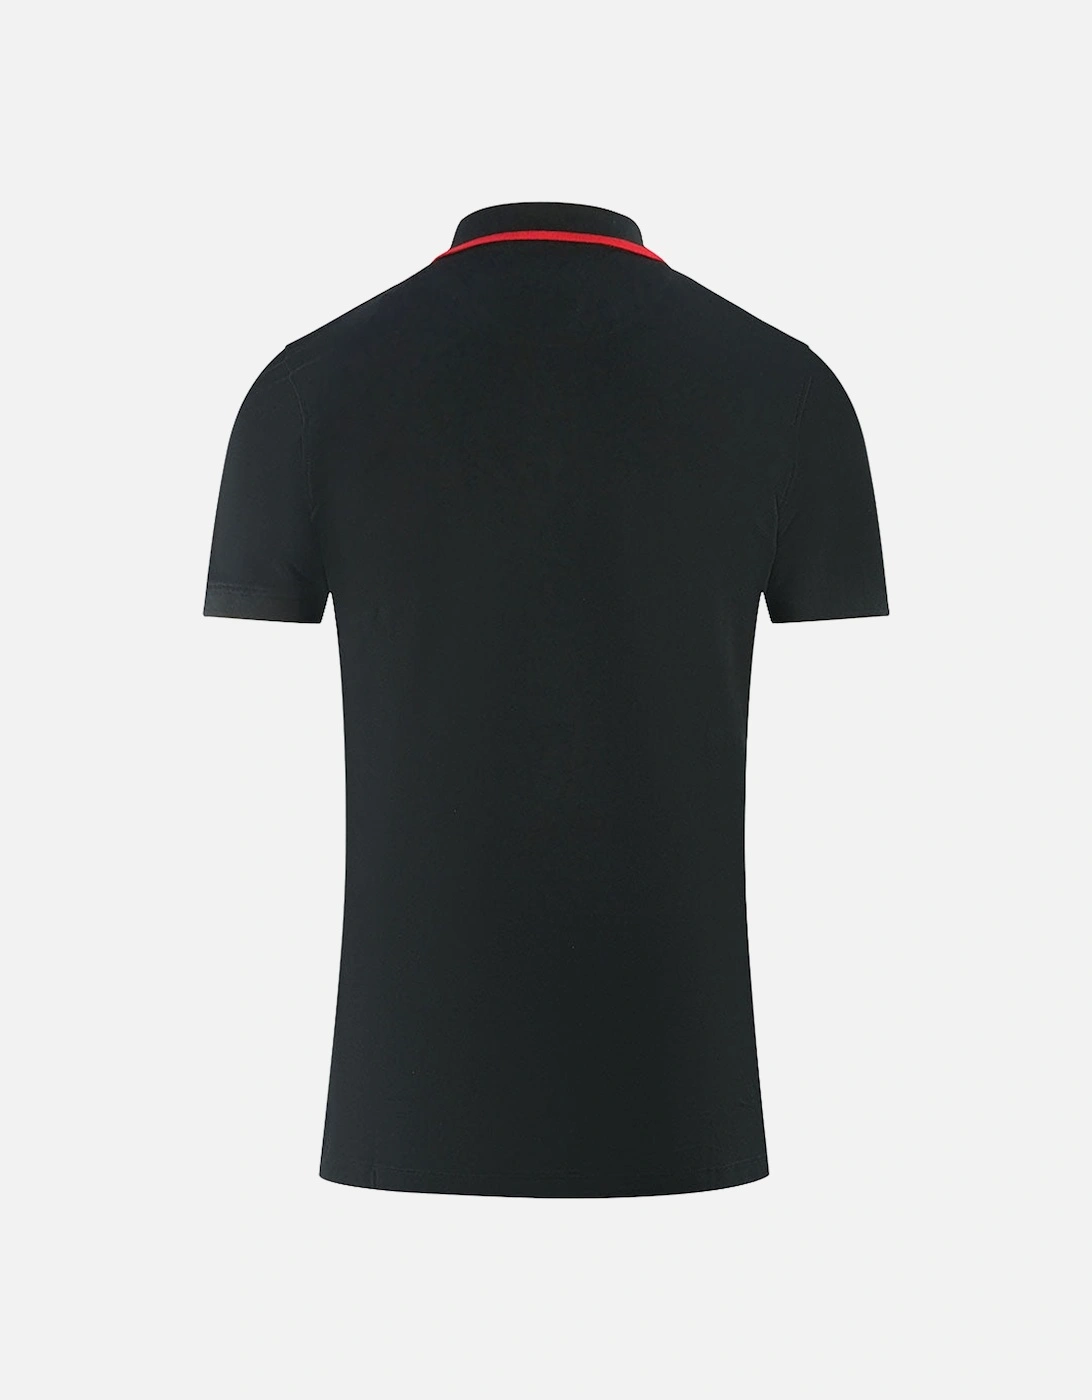 London 1851 Black Polo Shirt